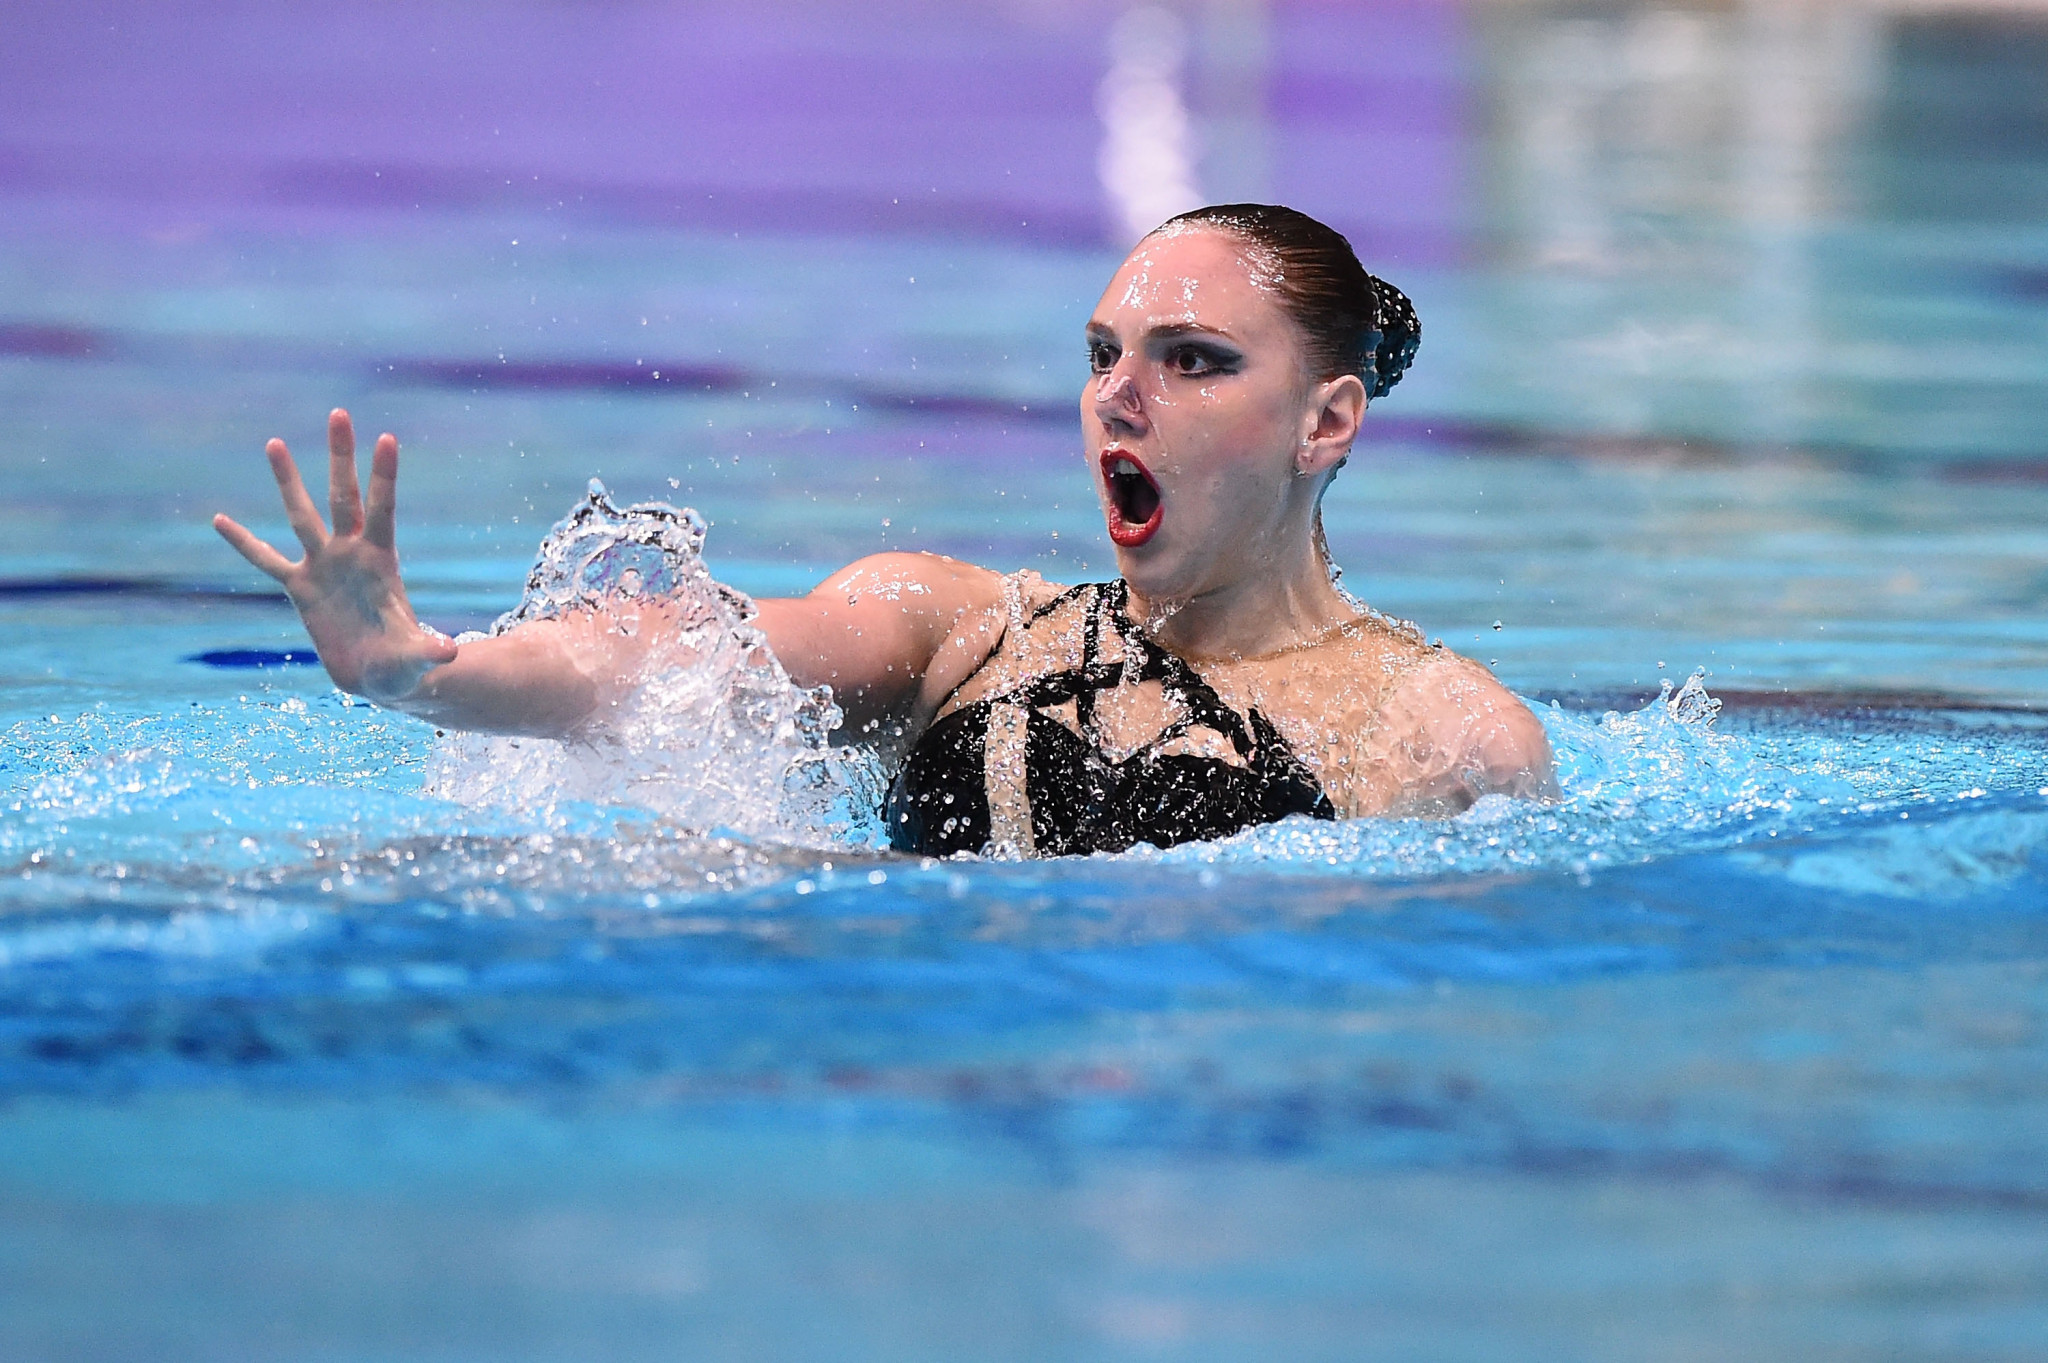 Kolesnichenko stars on opening day of FINA Artistic Swimming World Series in Tokyo